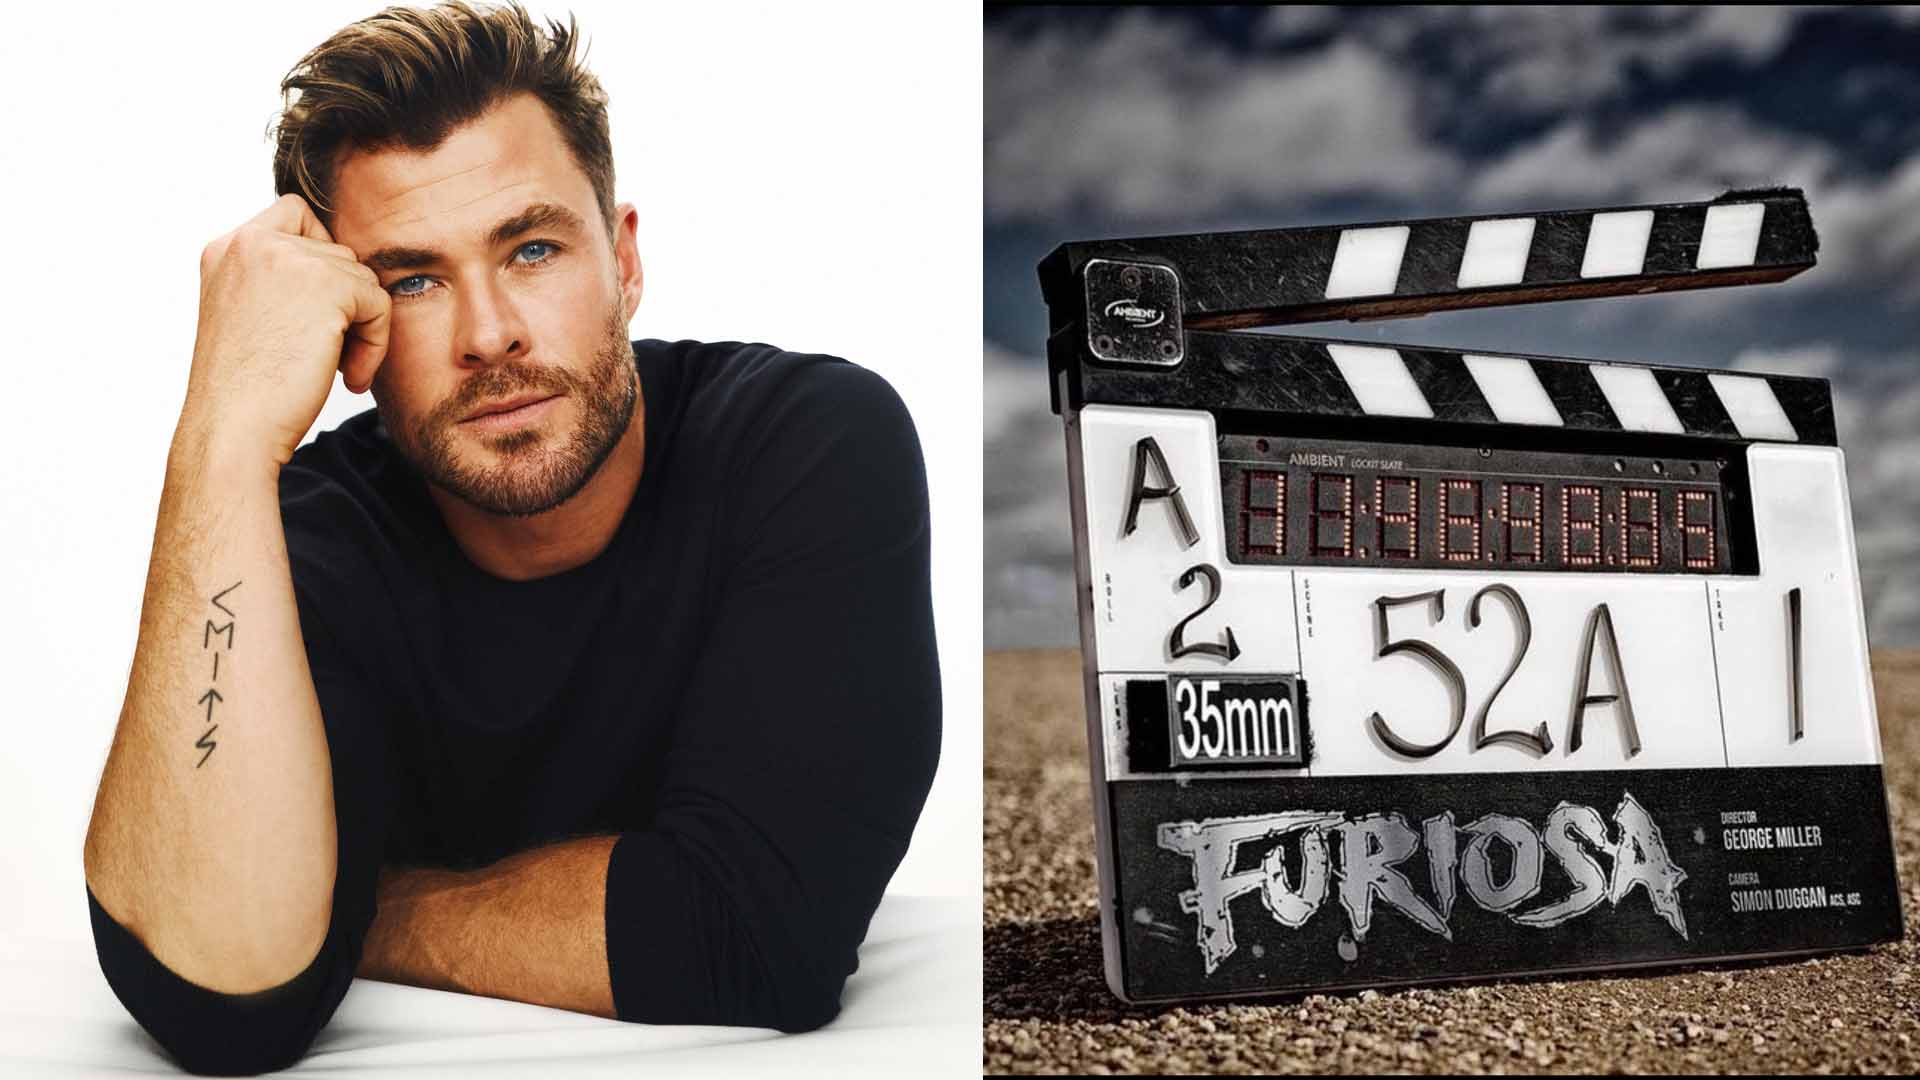 Furiosa' Trailer: Anya Taylor-Joy, Chris Hemsworth in 'Mad Max' Prequel